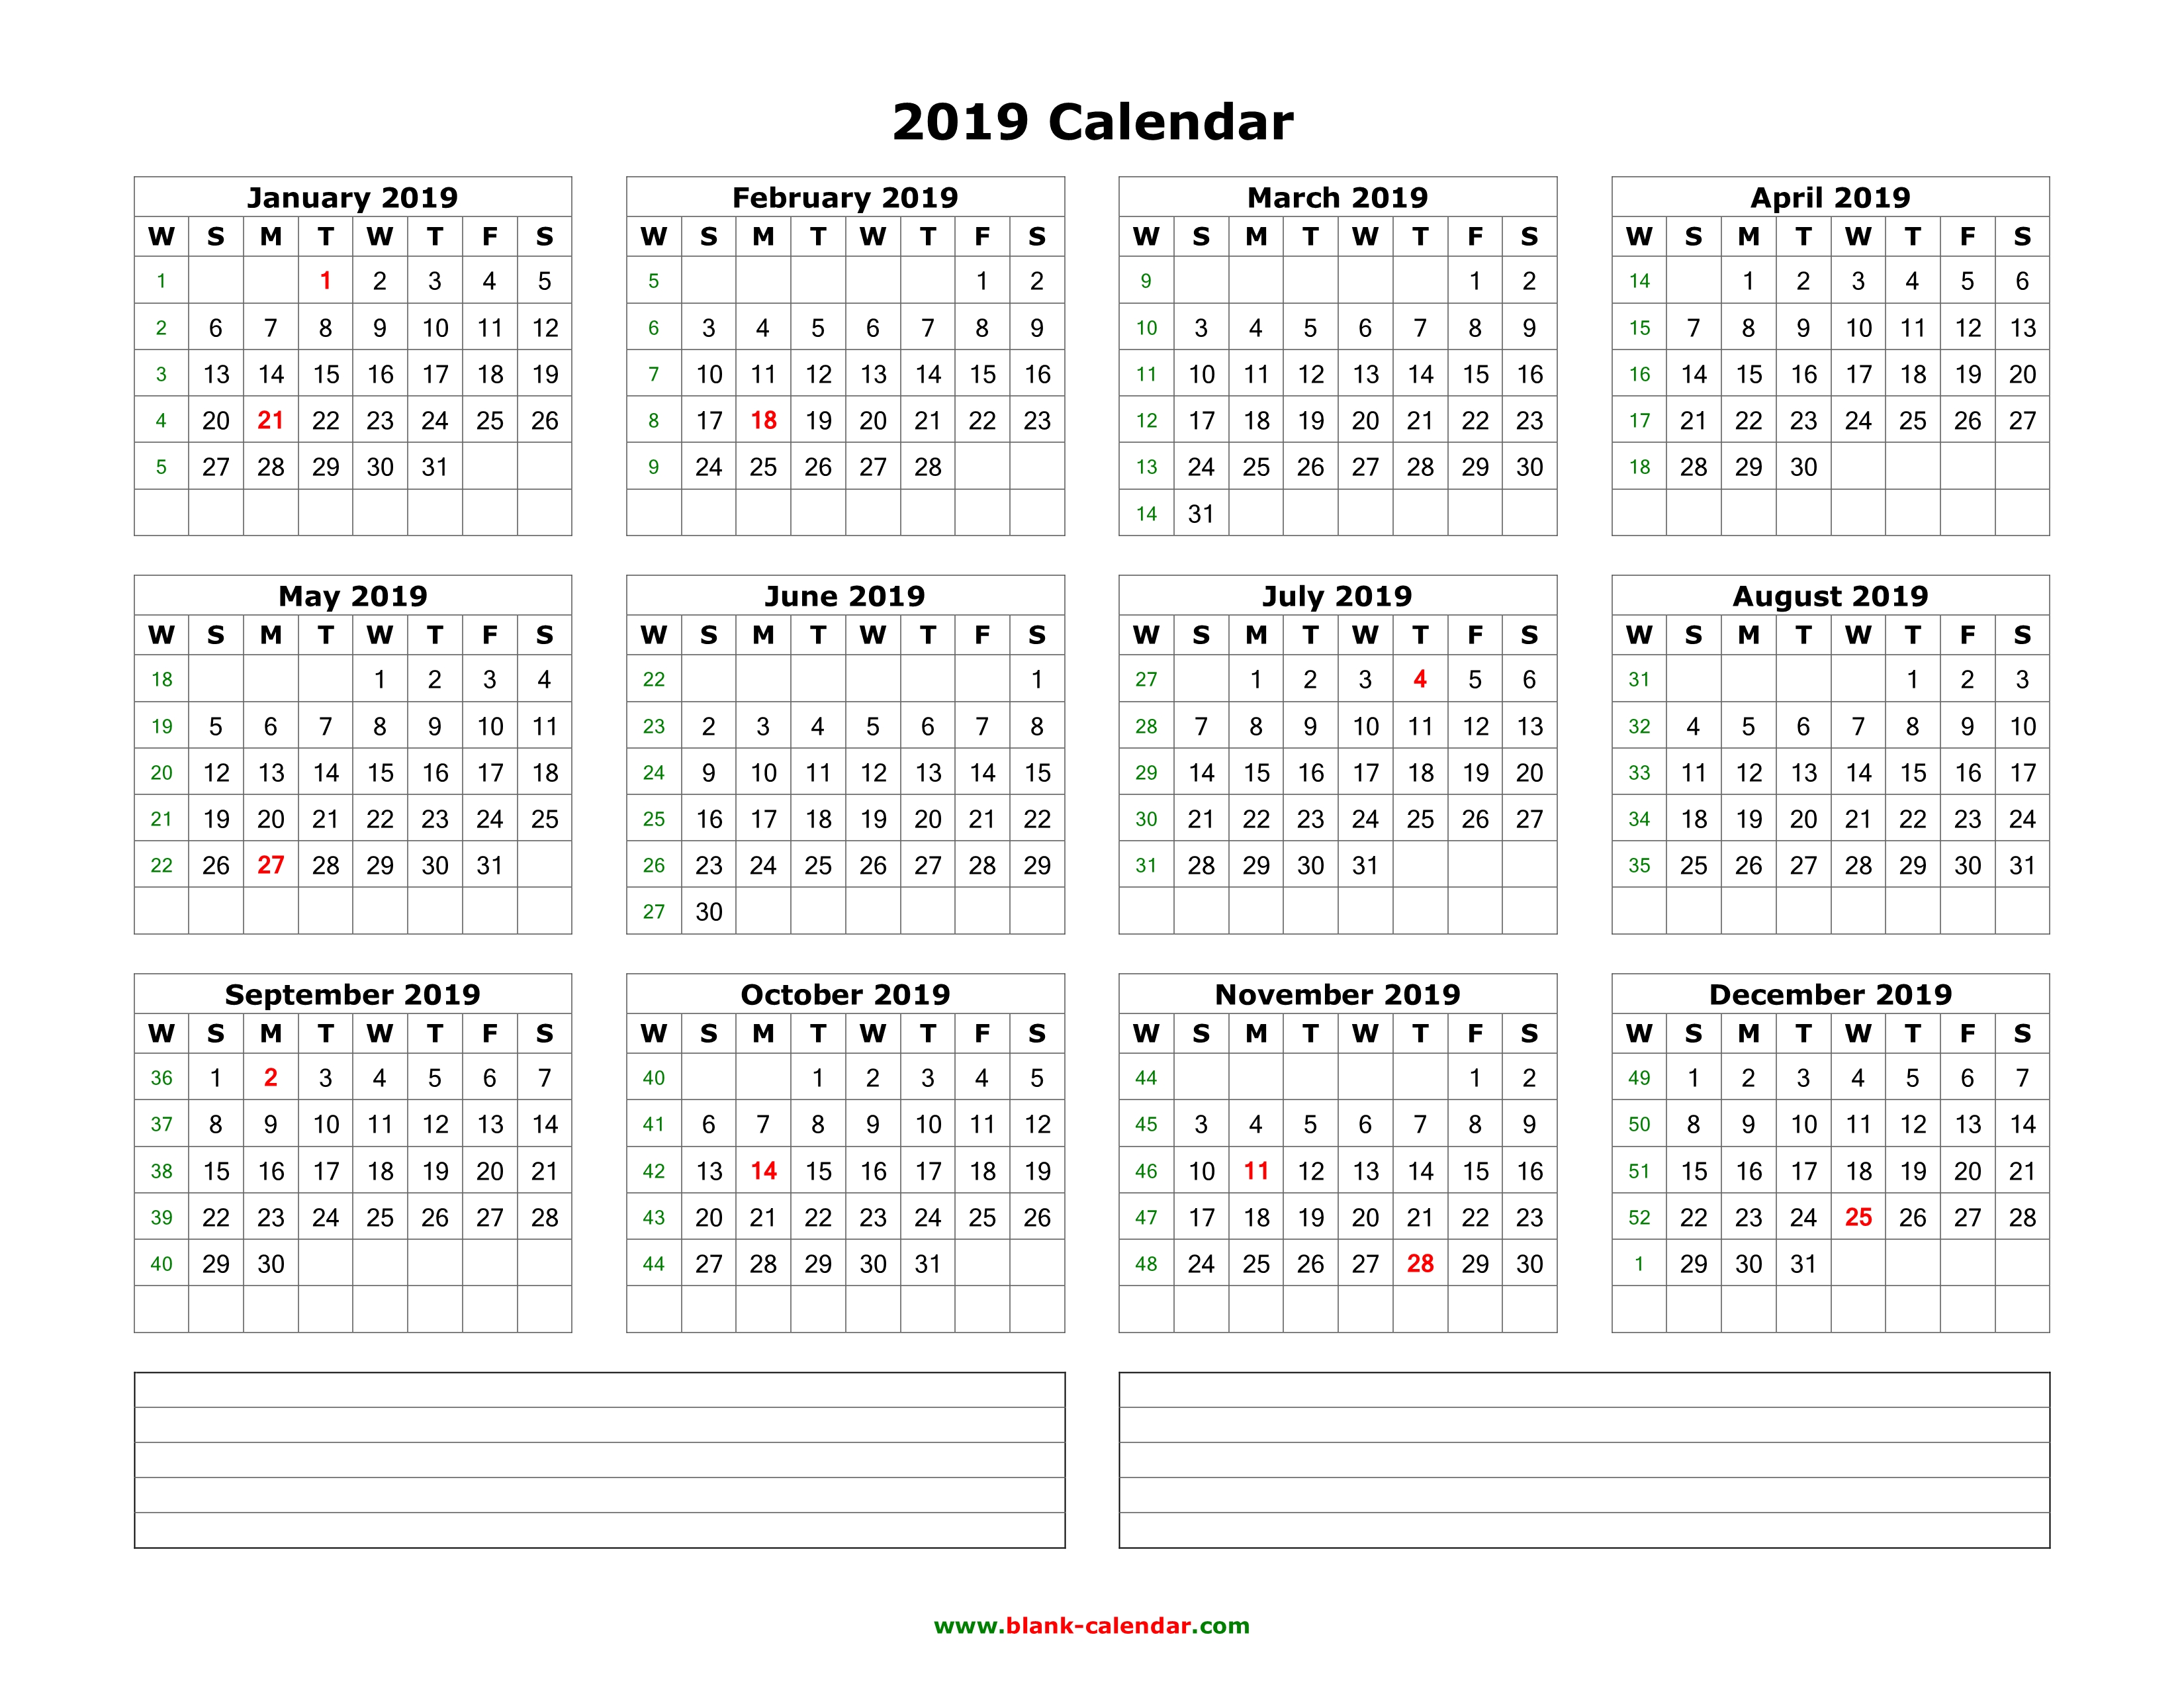 Calendar 2019 With Notes